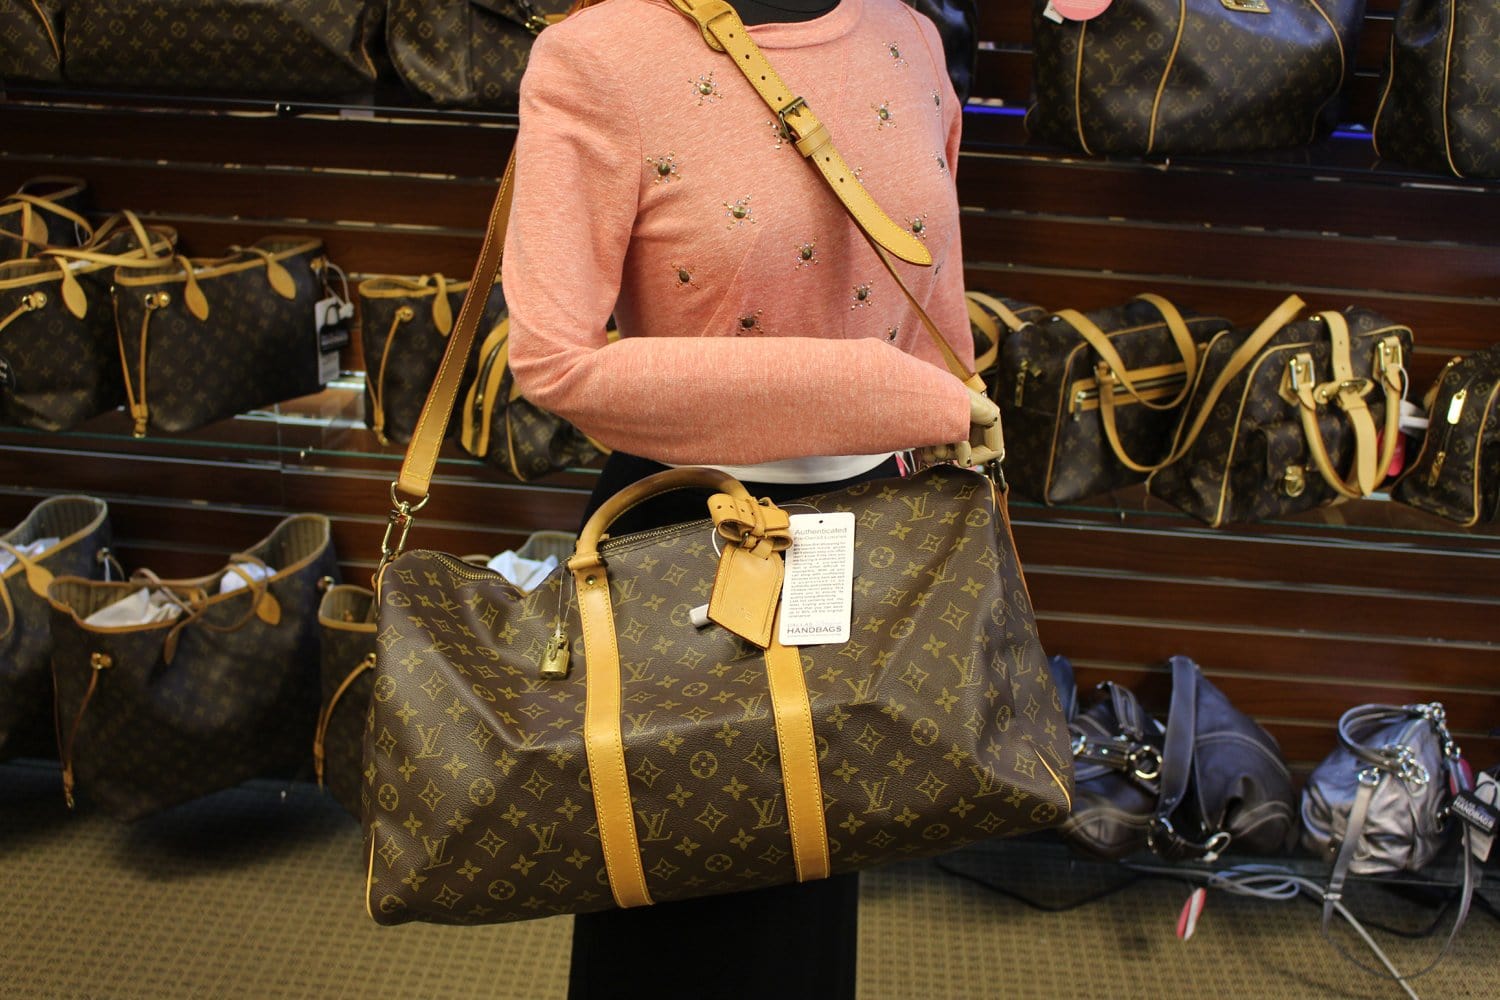 Louis Vuitton Louis Vuitton Keepall Bags & Handbags for Women